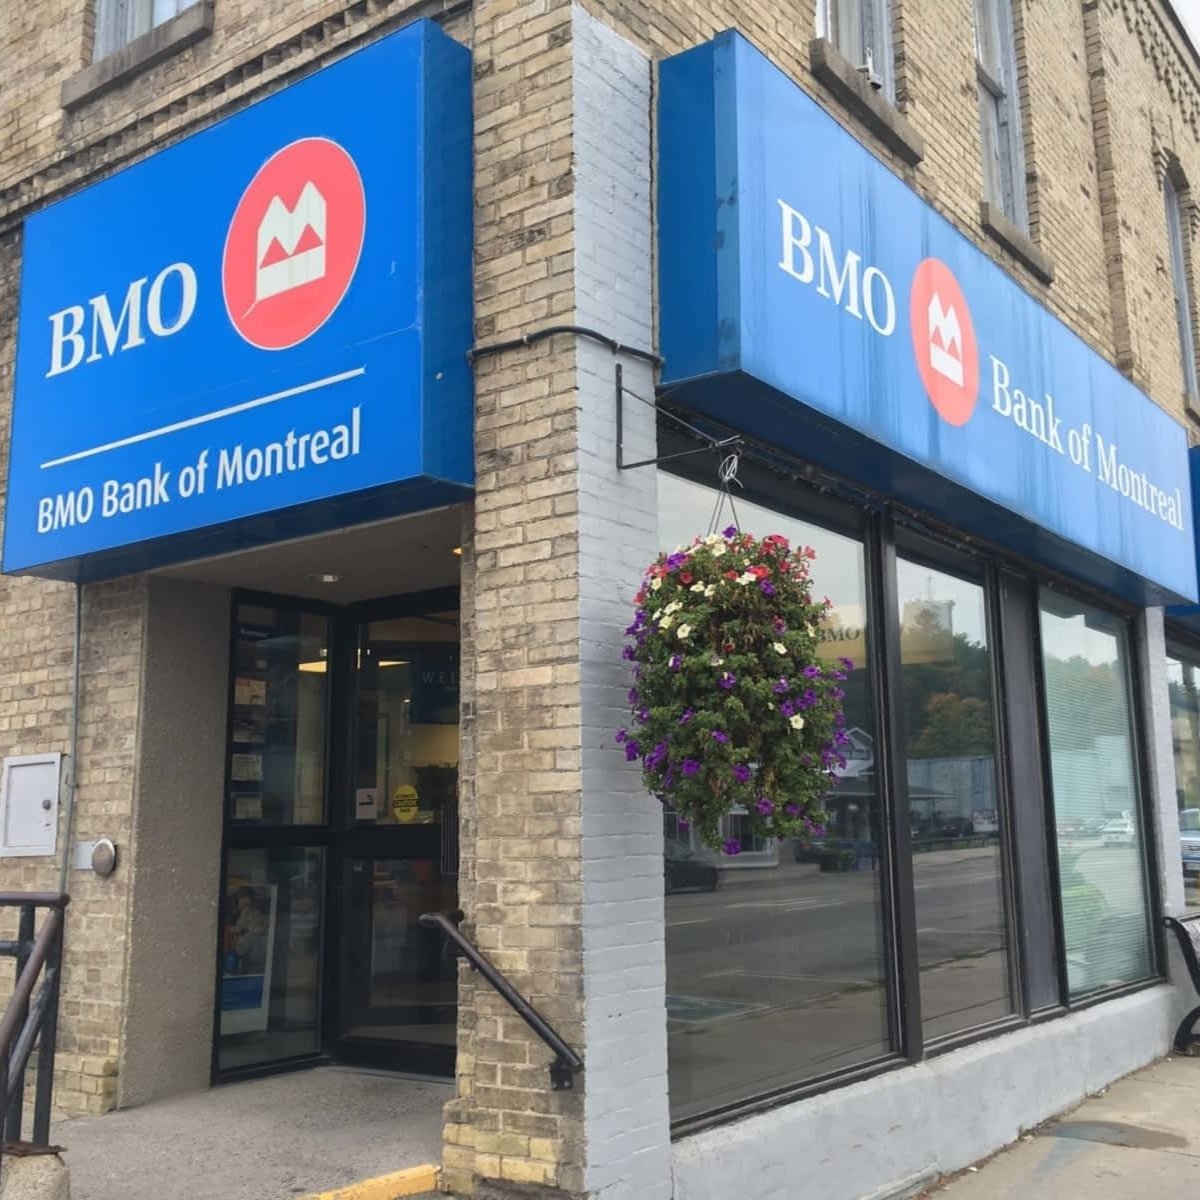 bmo-bank-of-montreal-storefront-1.jpg